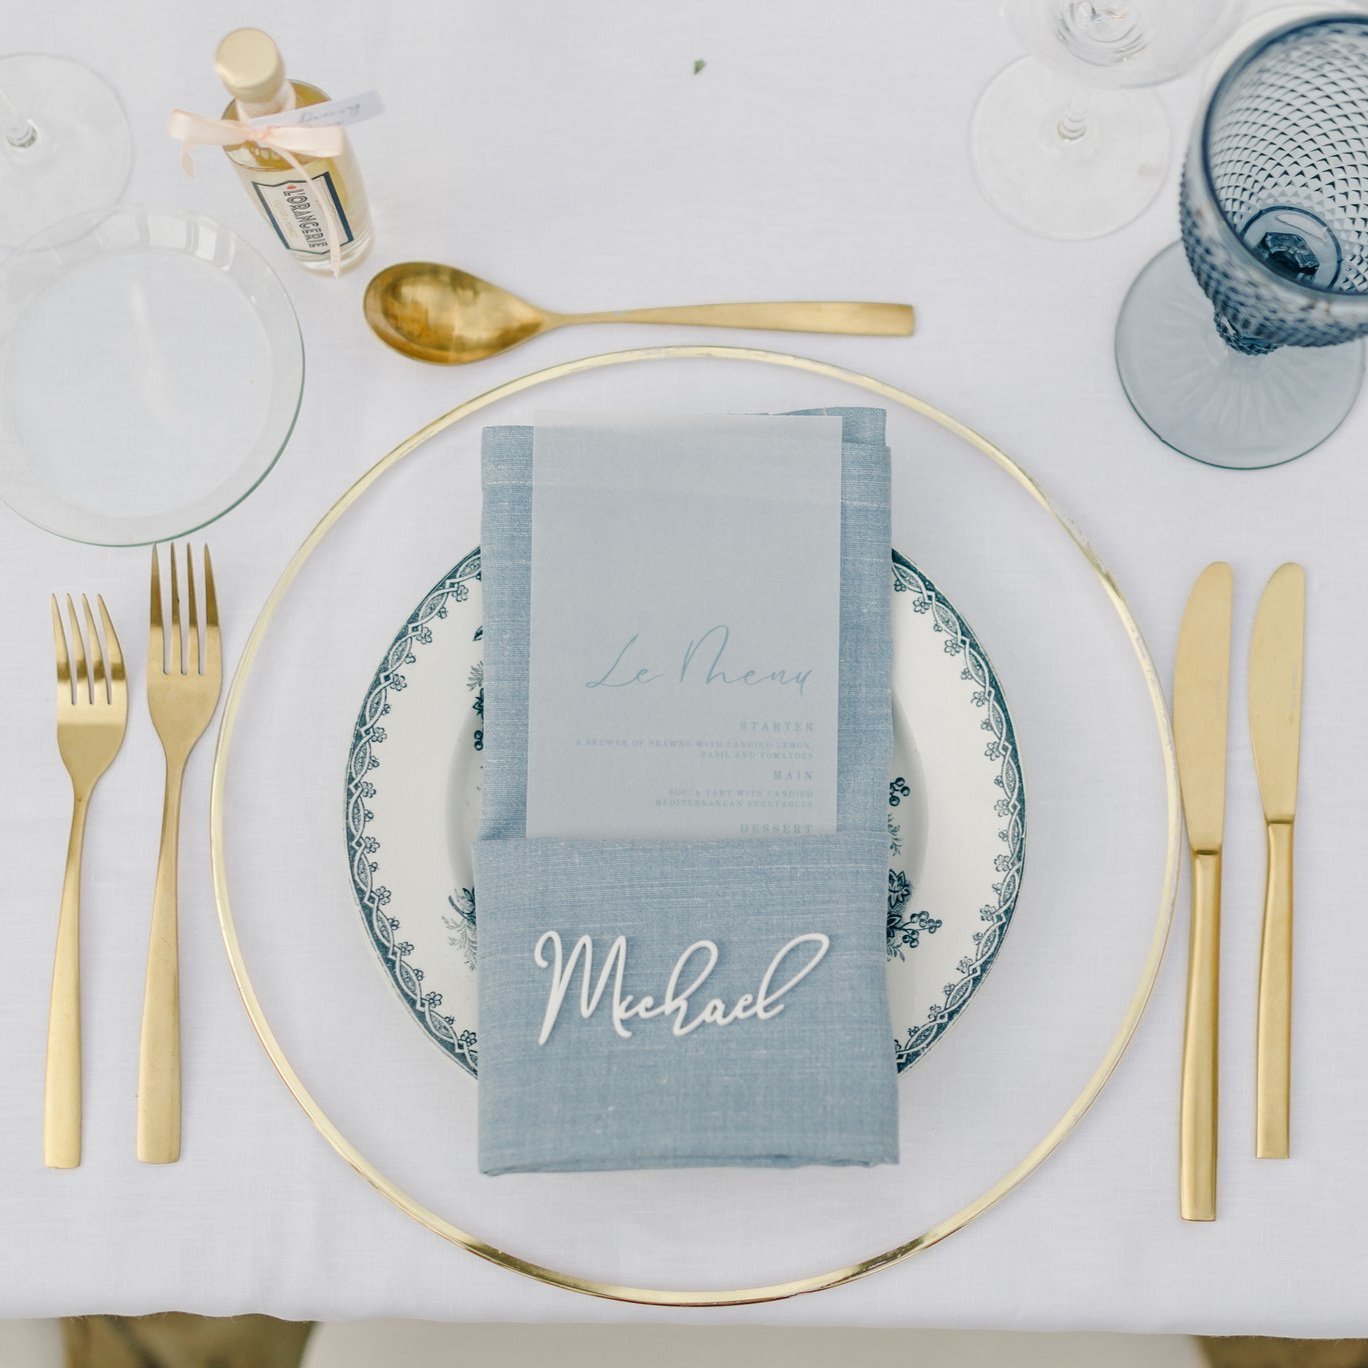 French-Riviera-Chateau-Castellaras-Wedding-Invitations-nametags-menu-romantic-wedding-stationary-blue-and-beige-watercolor-seathrough-menu.jpg